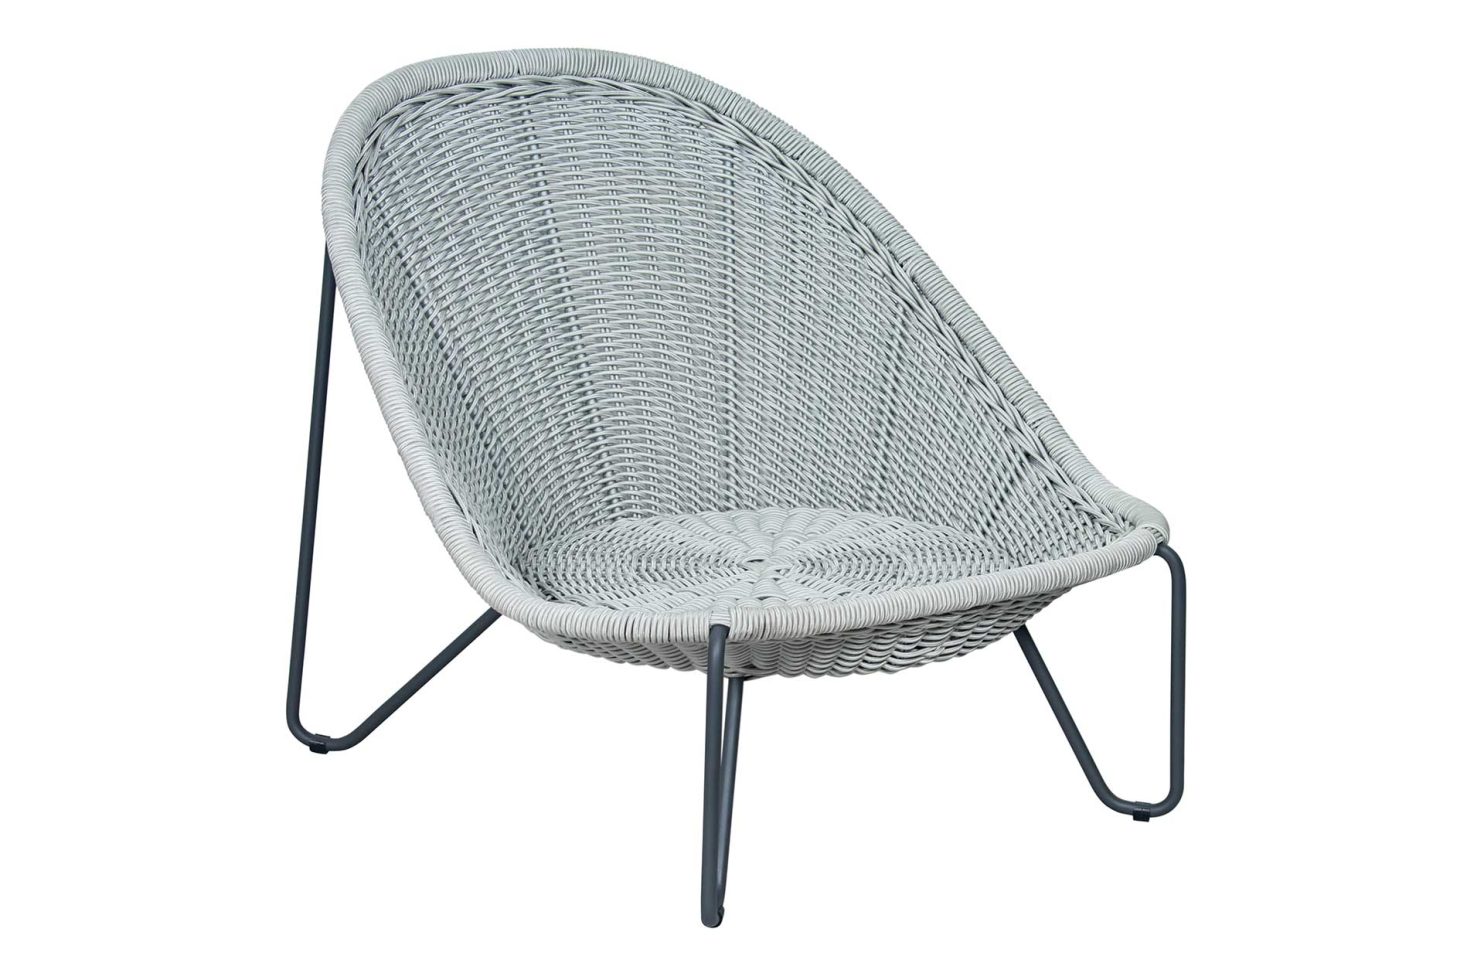 arch azores chair A620600424 no cushion 3Q front web